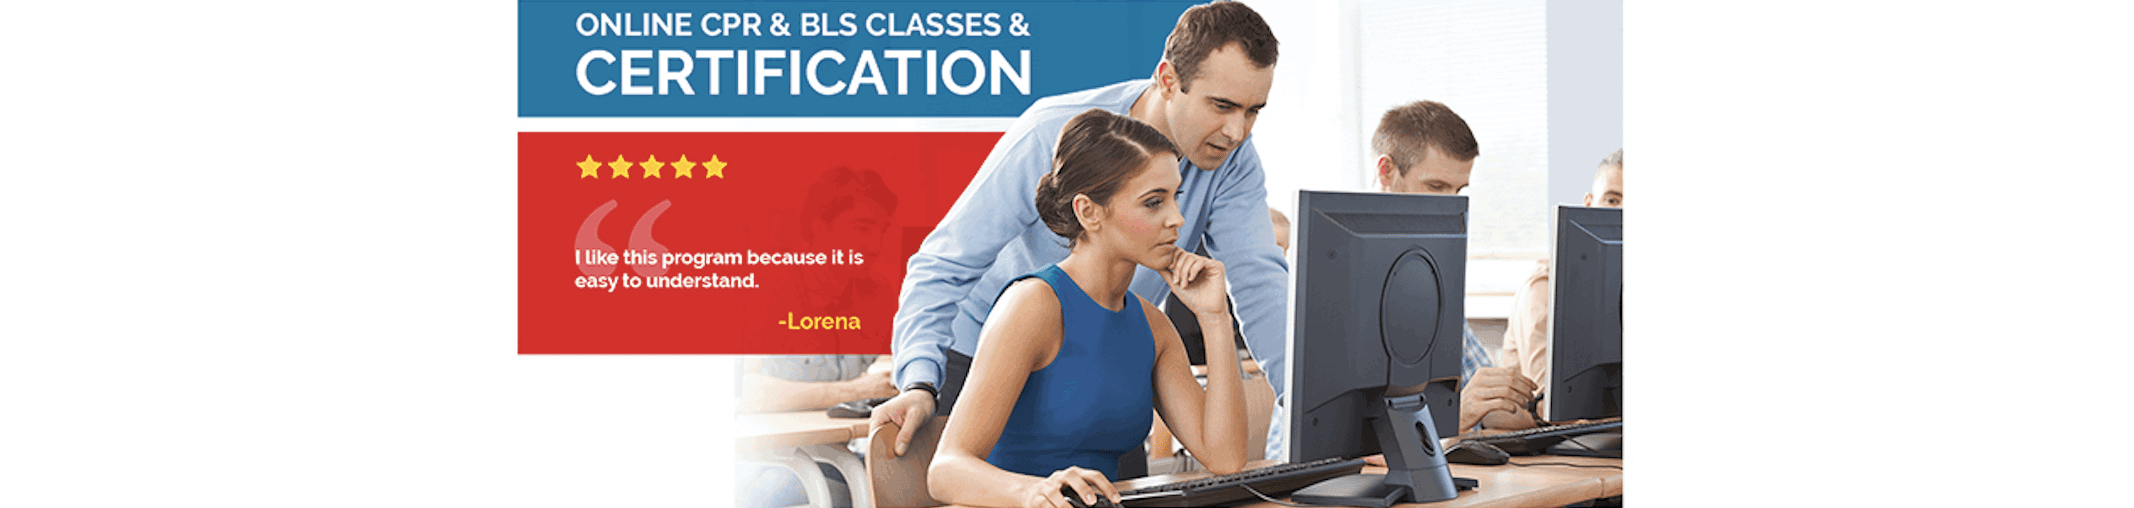 online cpr & BLS classes certification